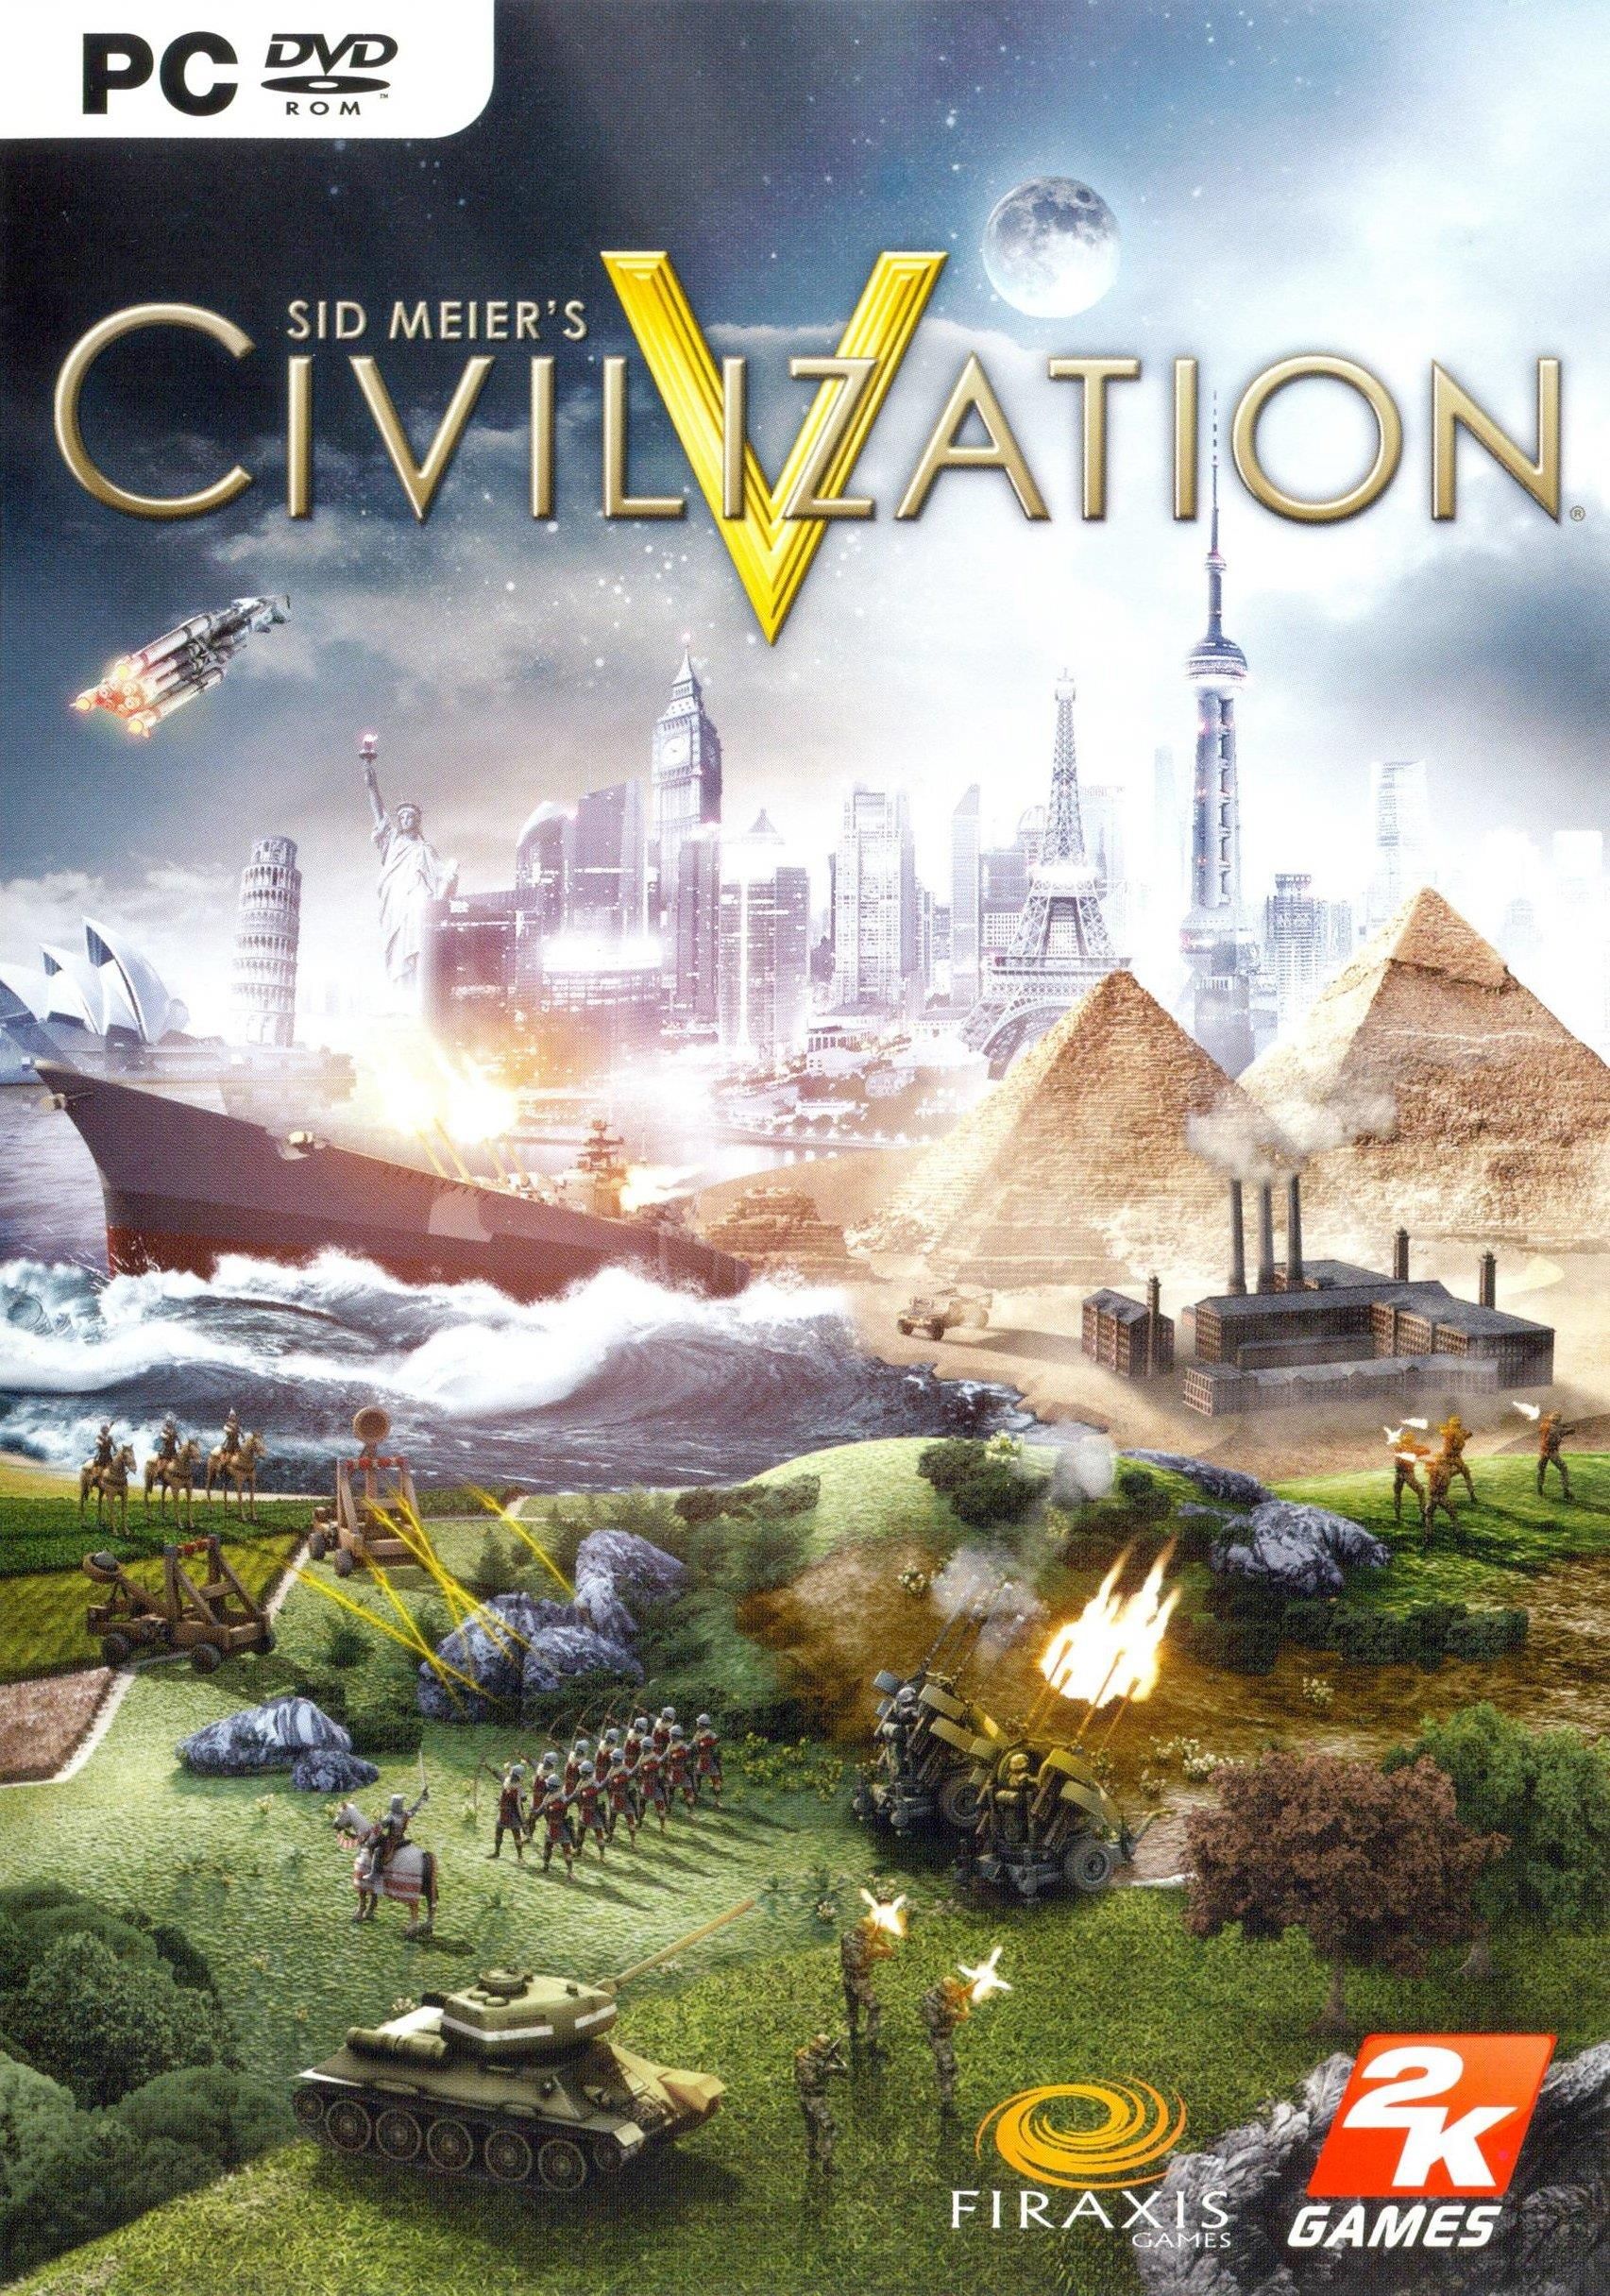 Civilization V Digital Od 7 83 Zl Opinie Ceneo Pl